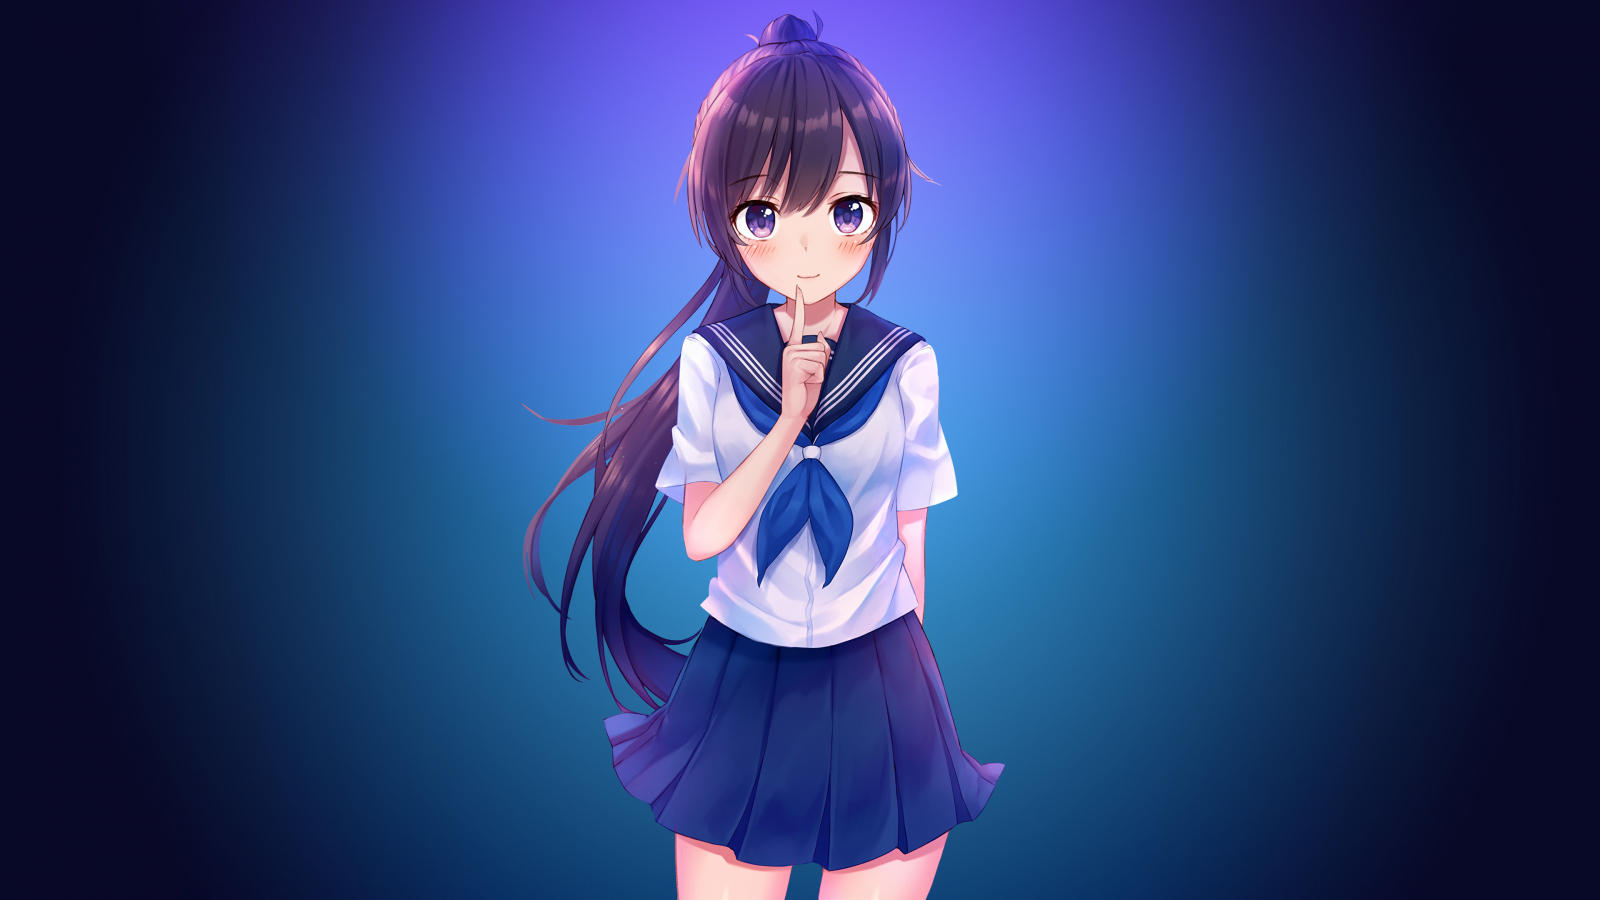 Download school dress, original, anime girl, cute 1600x900 wallpaper, 16:9 widescreen 1600x900 HD image, background, 117